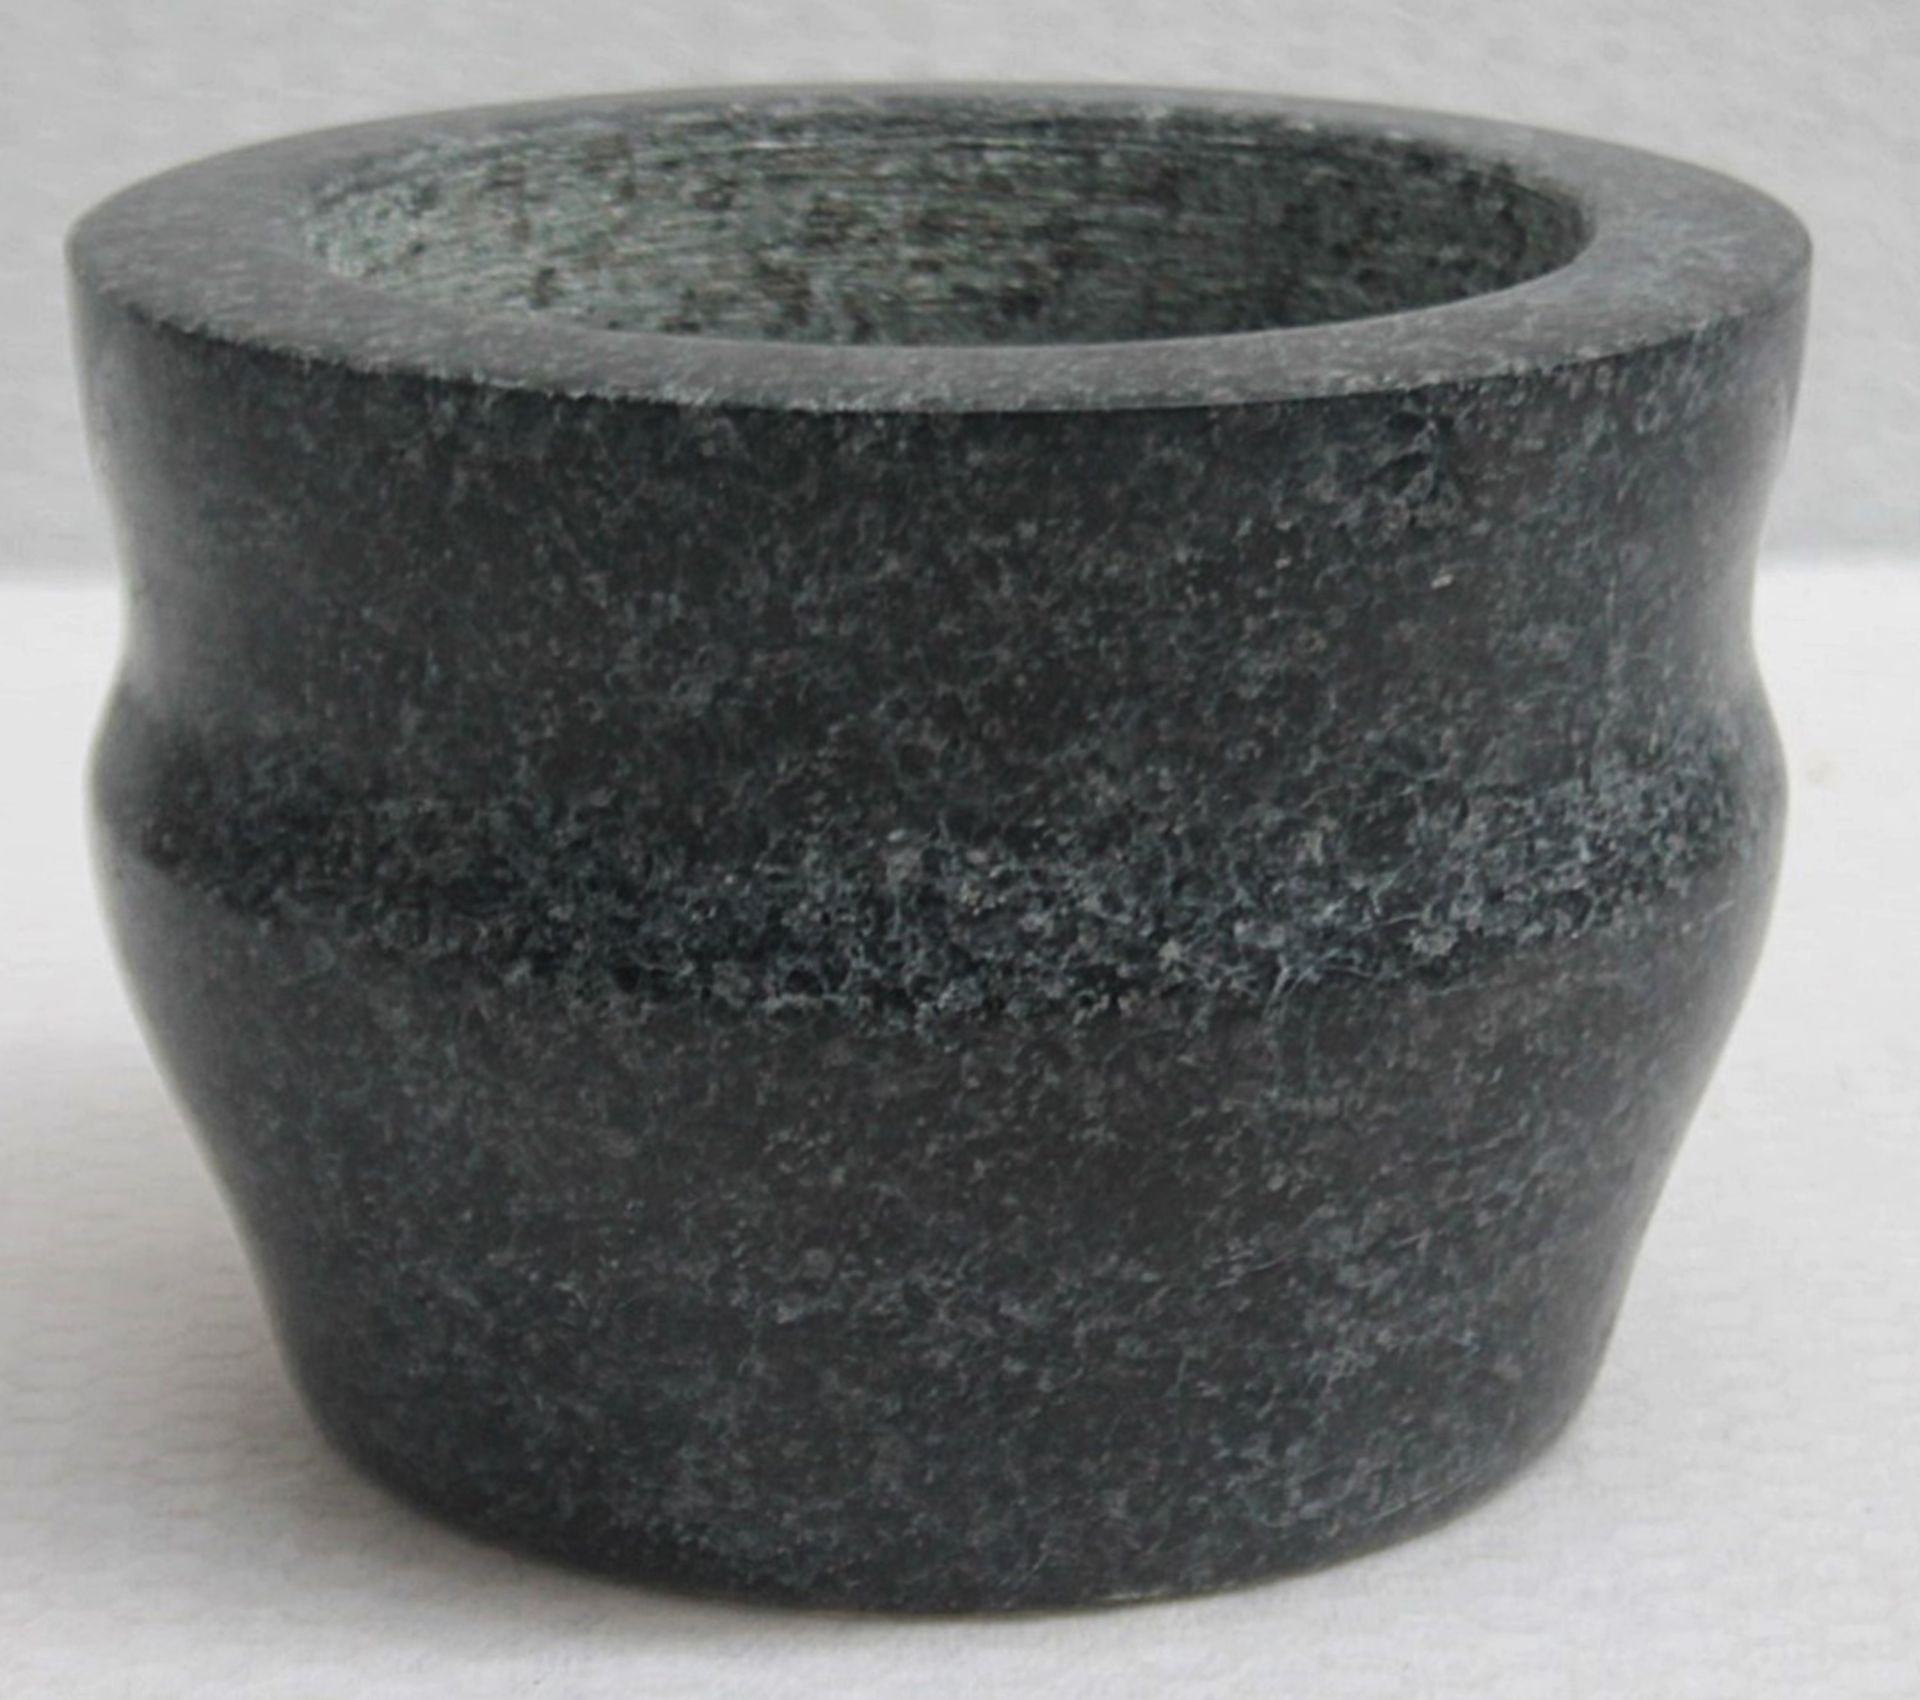 1 x COLE & MASON Granite Pestle & Mortar 18cm, Black - Unused Boxed Stock - Ref: 3310048/HAS2103/ - Image 7 of 8